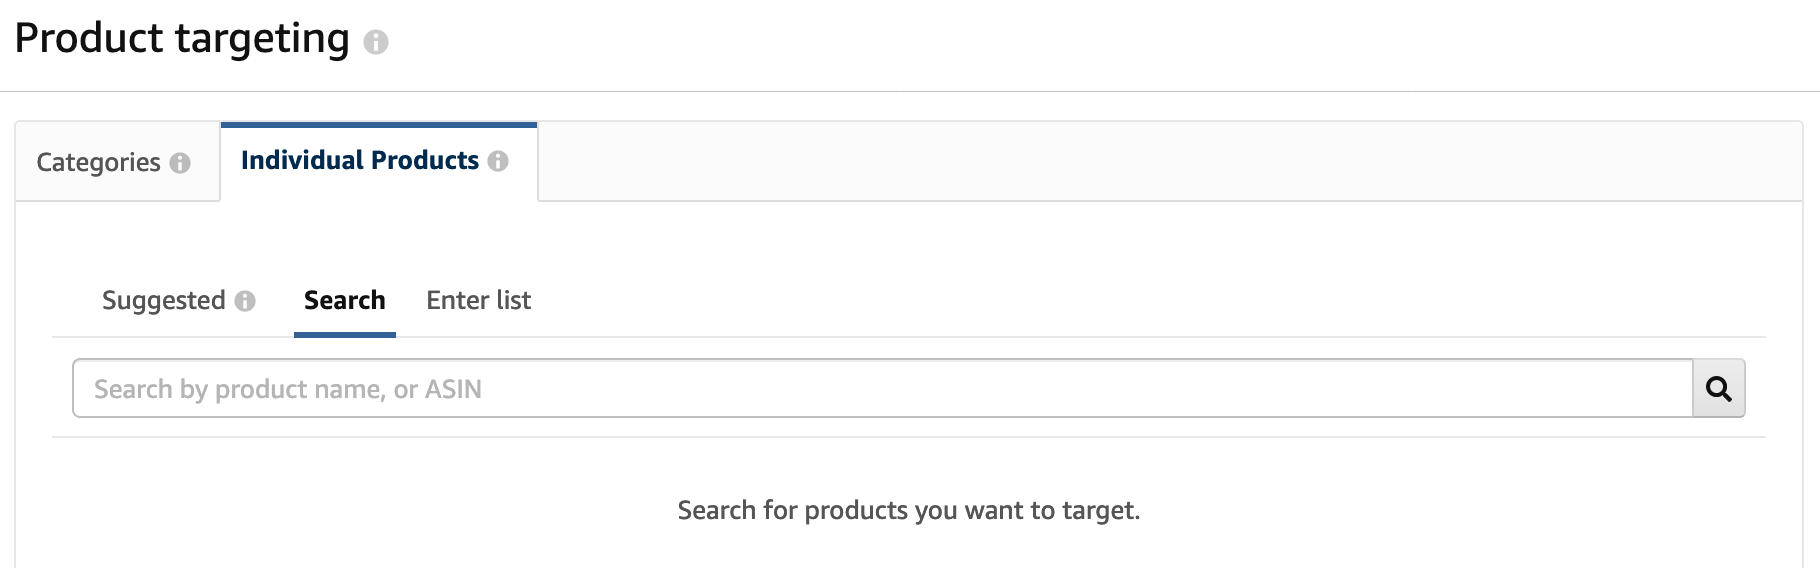 Individual Product Targeting on Amazon